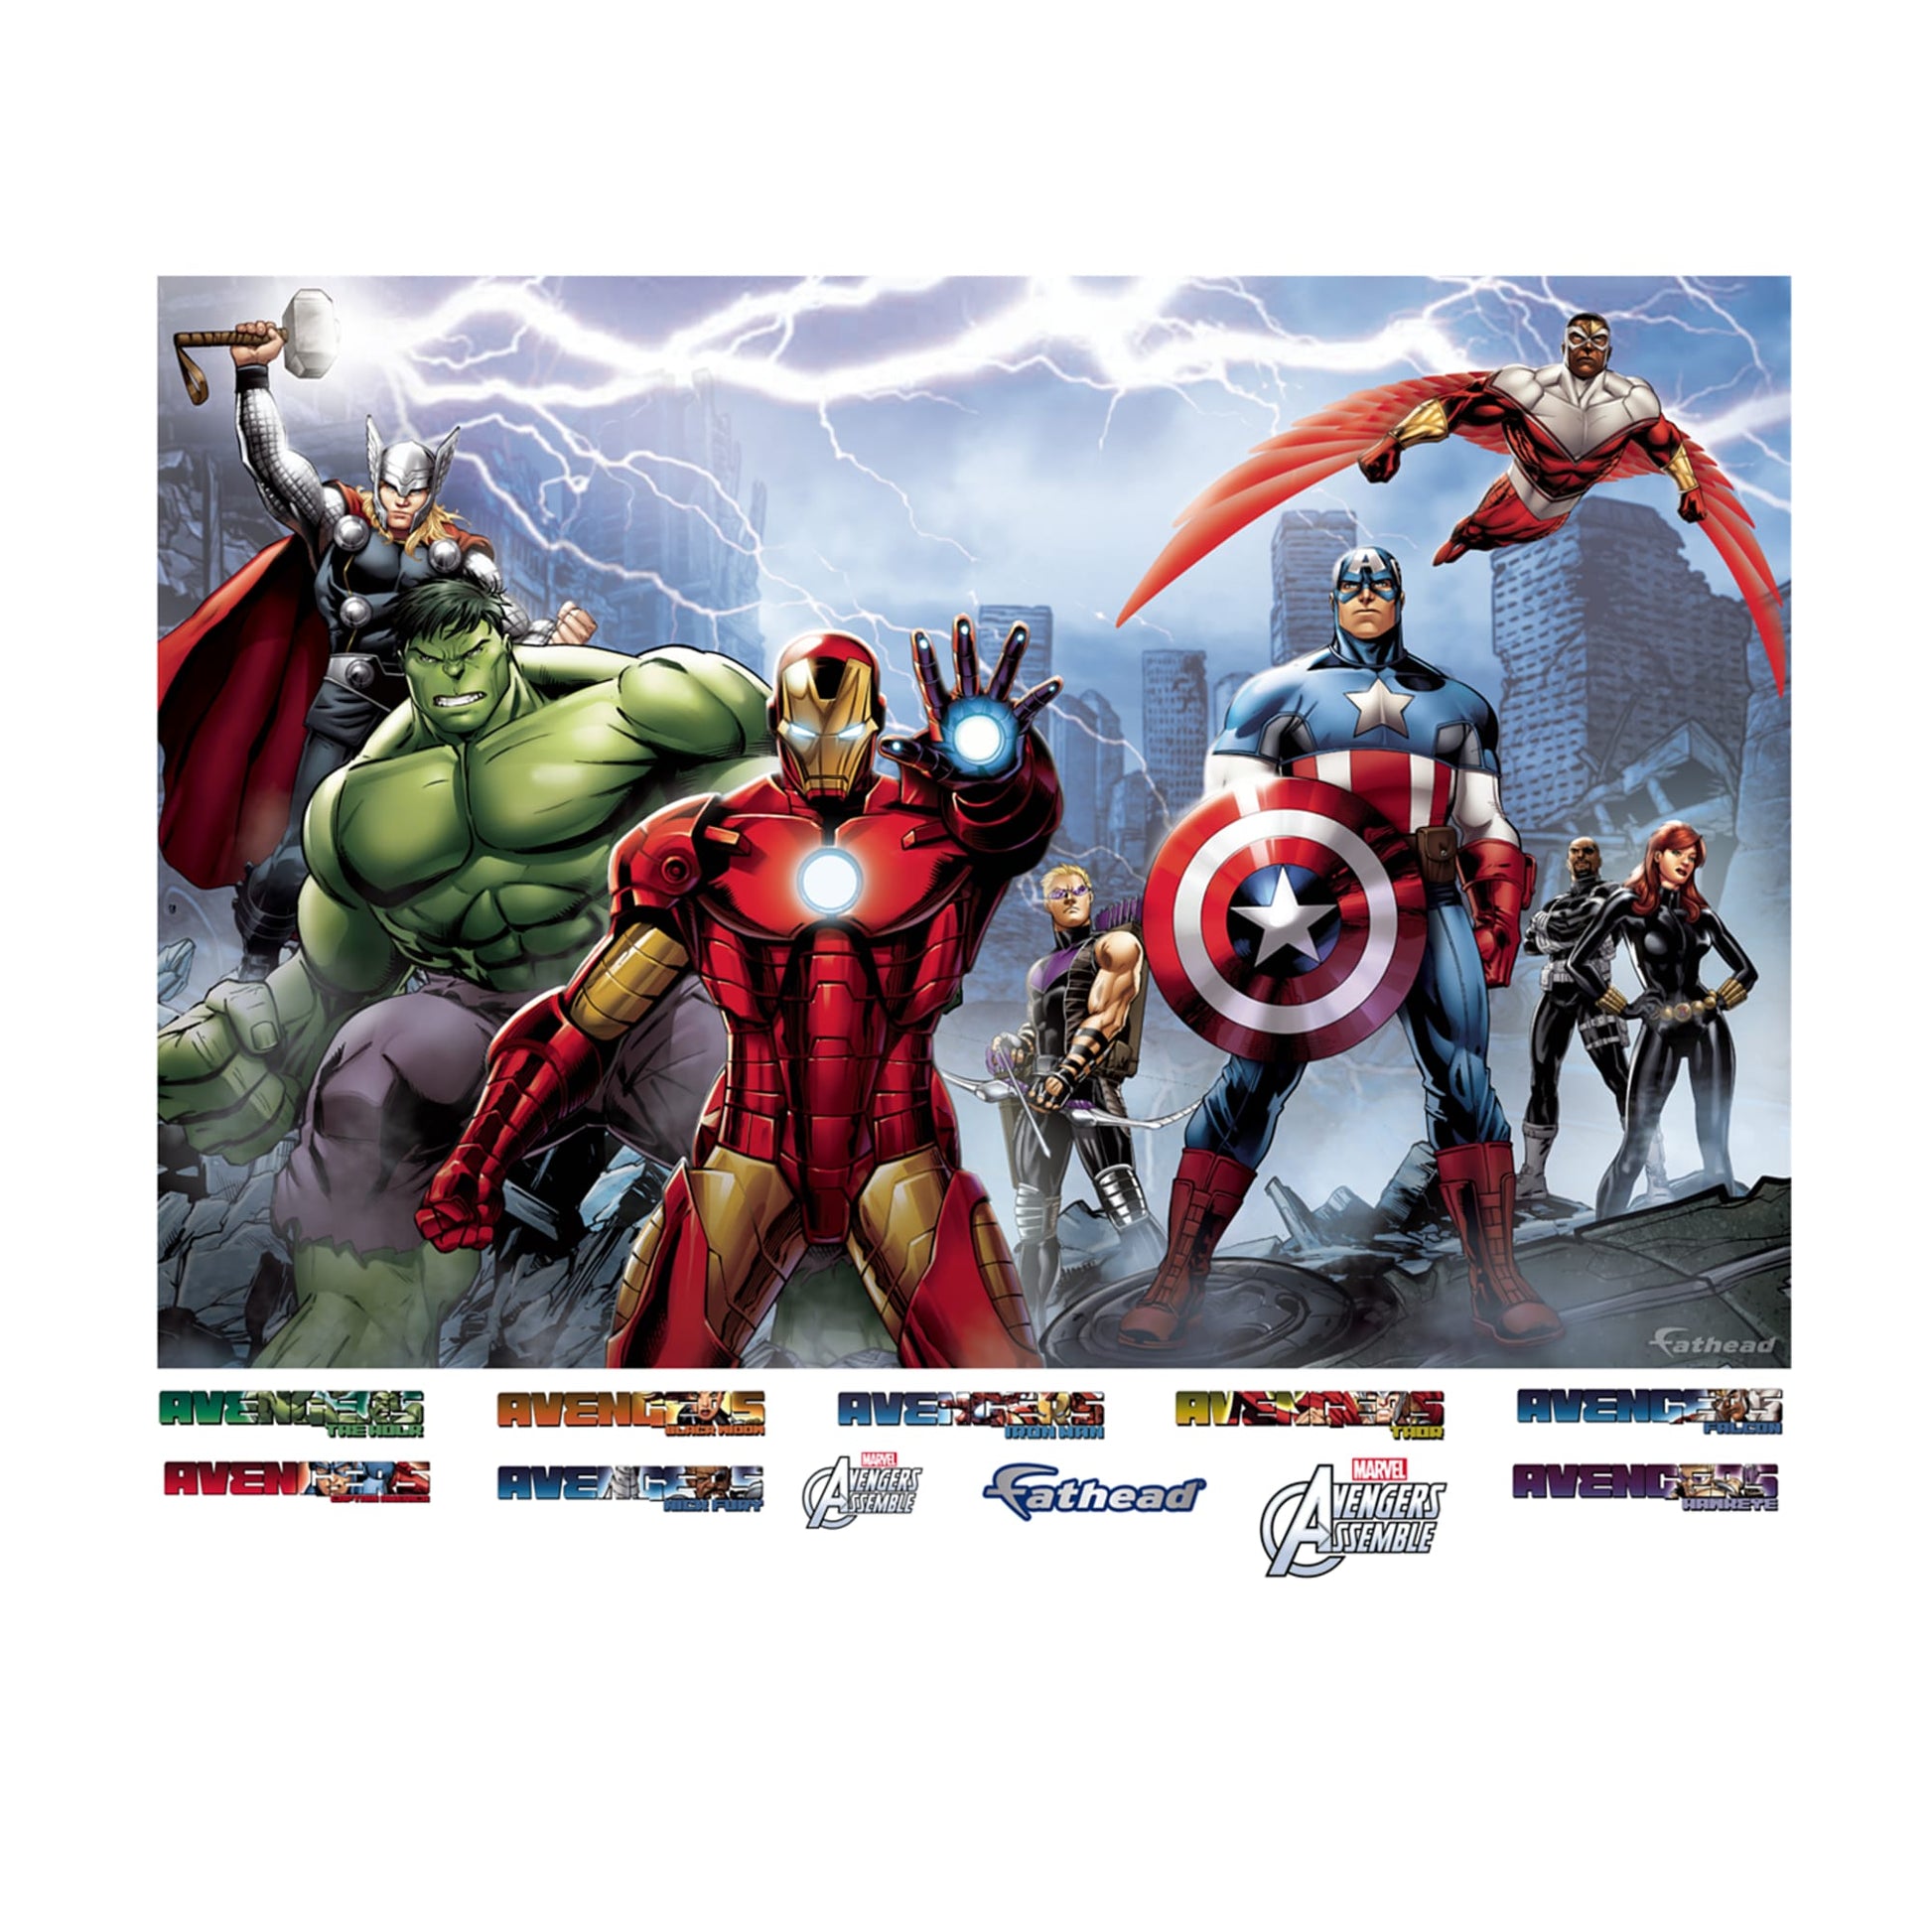 Marvel Avengers Assemble & Ultimate Spiderman Kids Sports Water